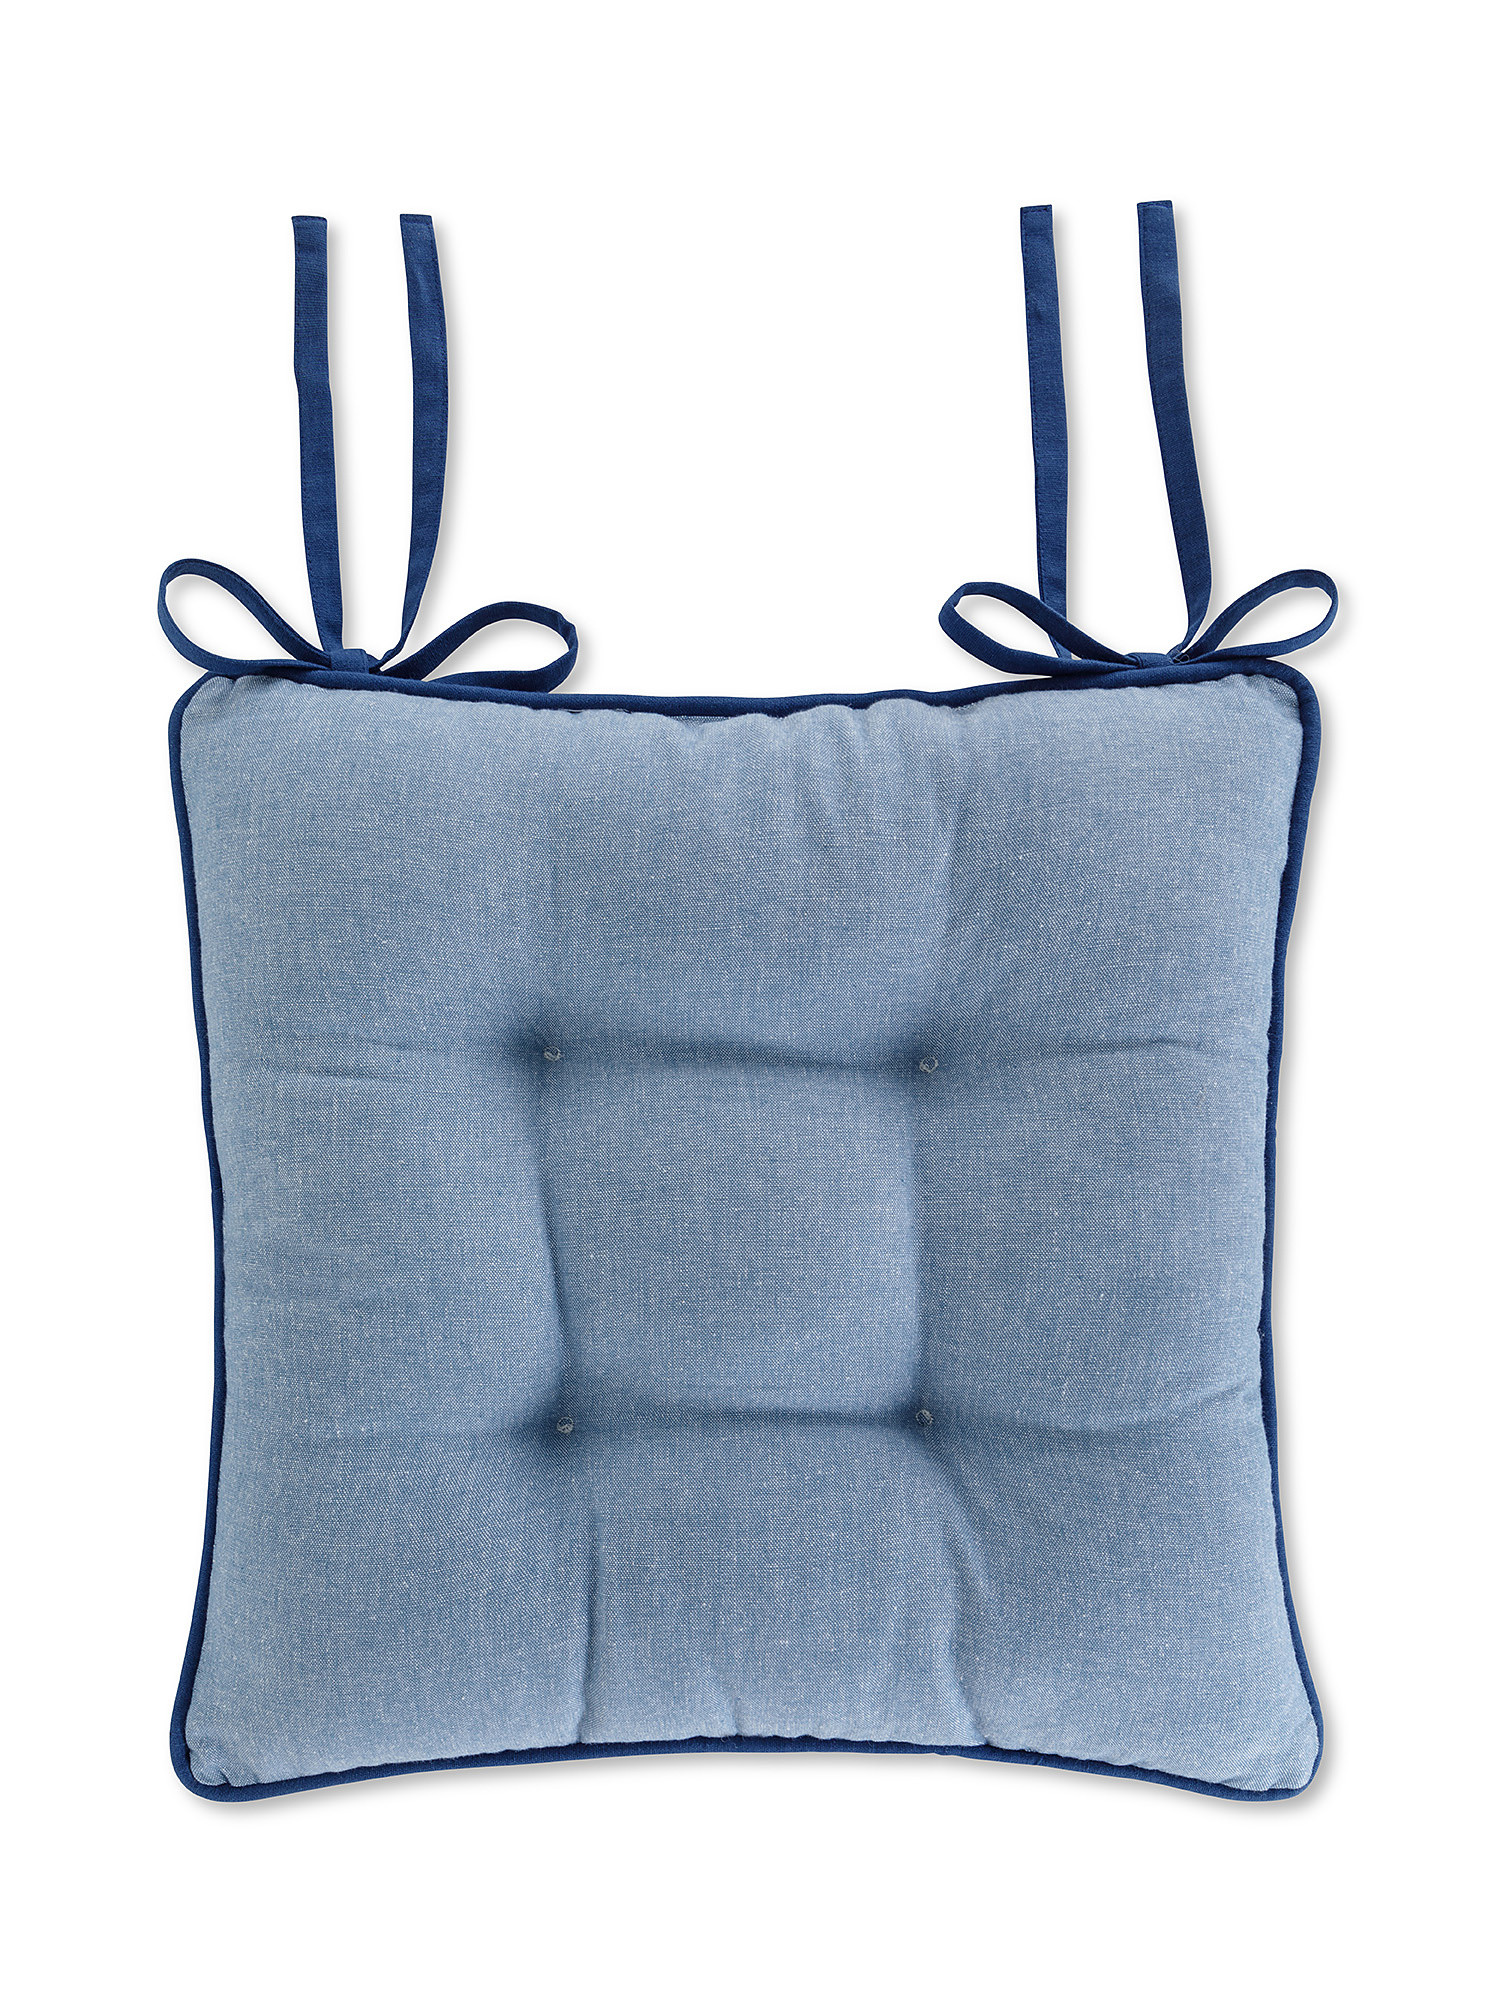 Cuscino da sedia cotone chambré orlo a contrasto, Blu, large image number 0